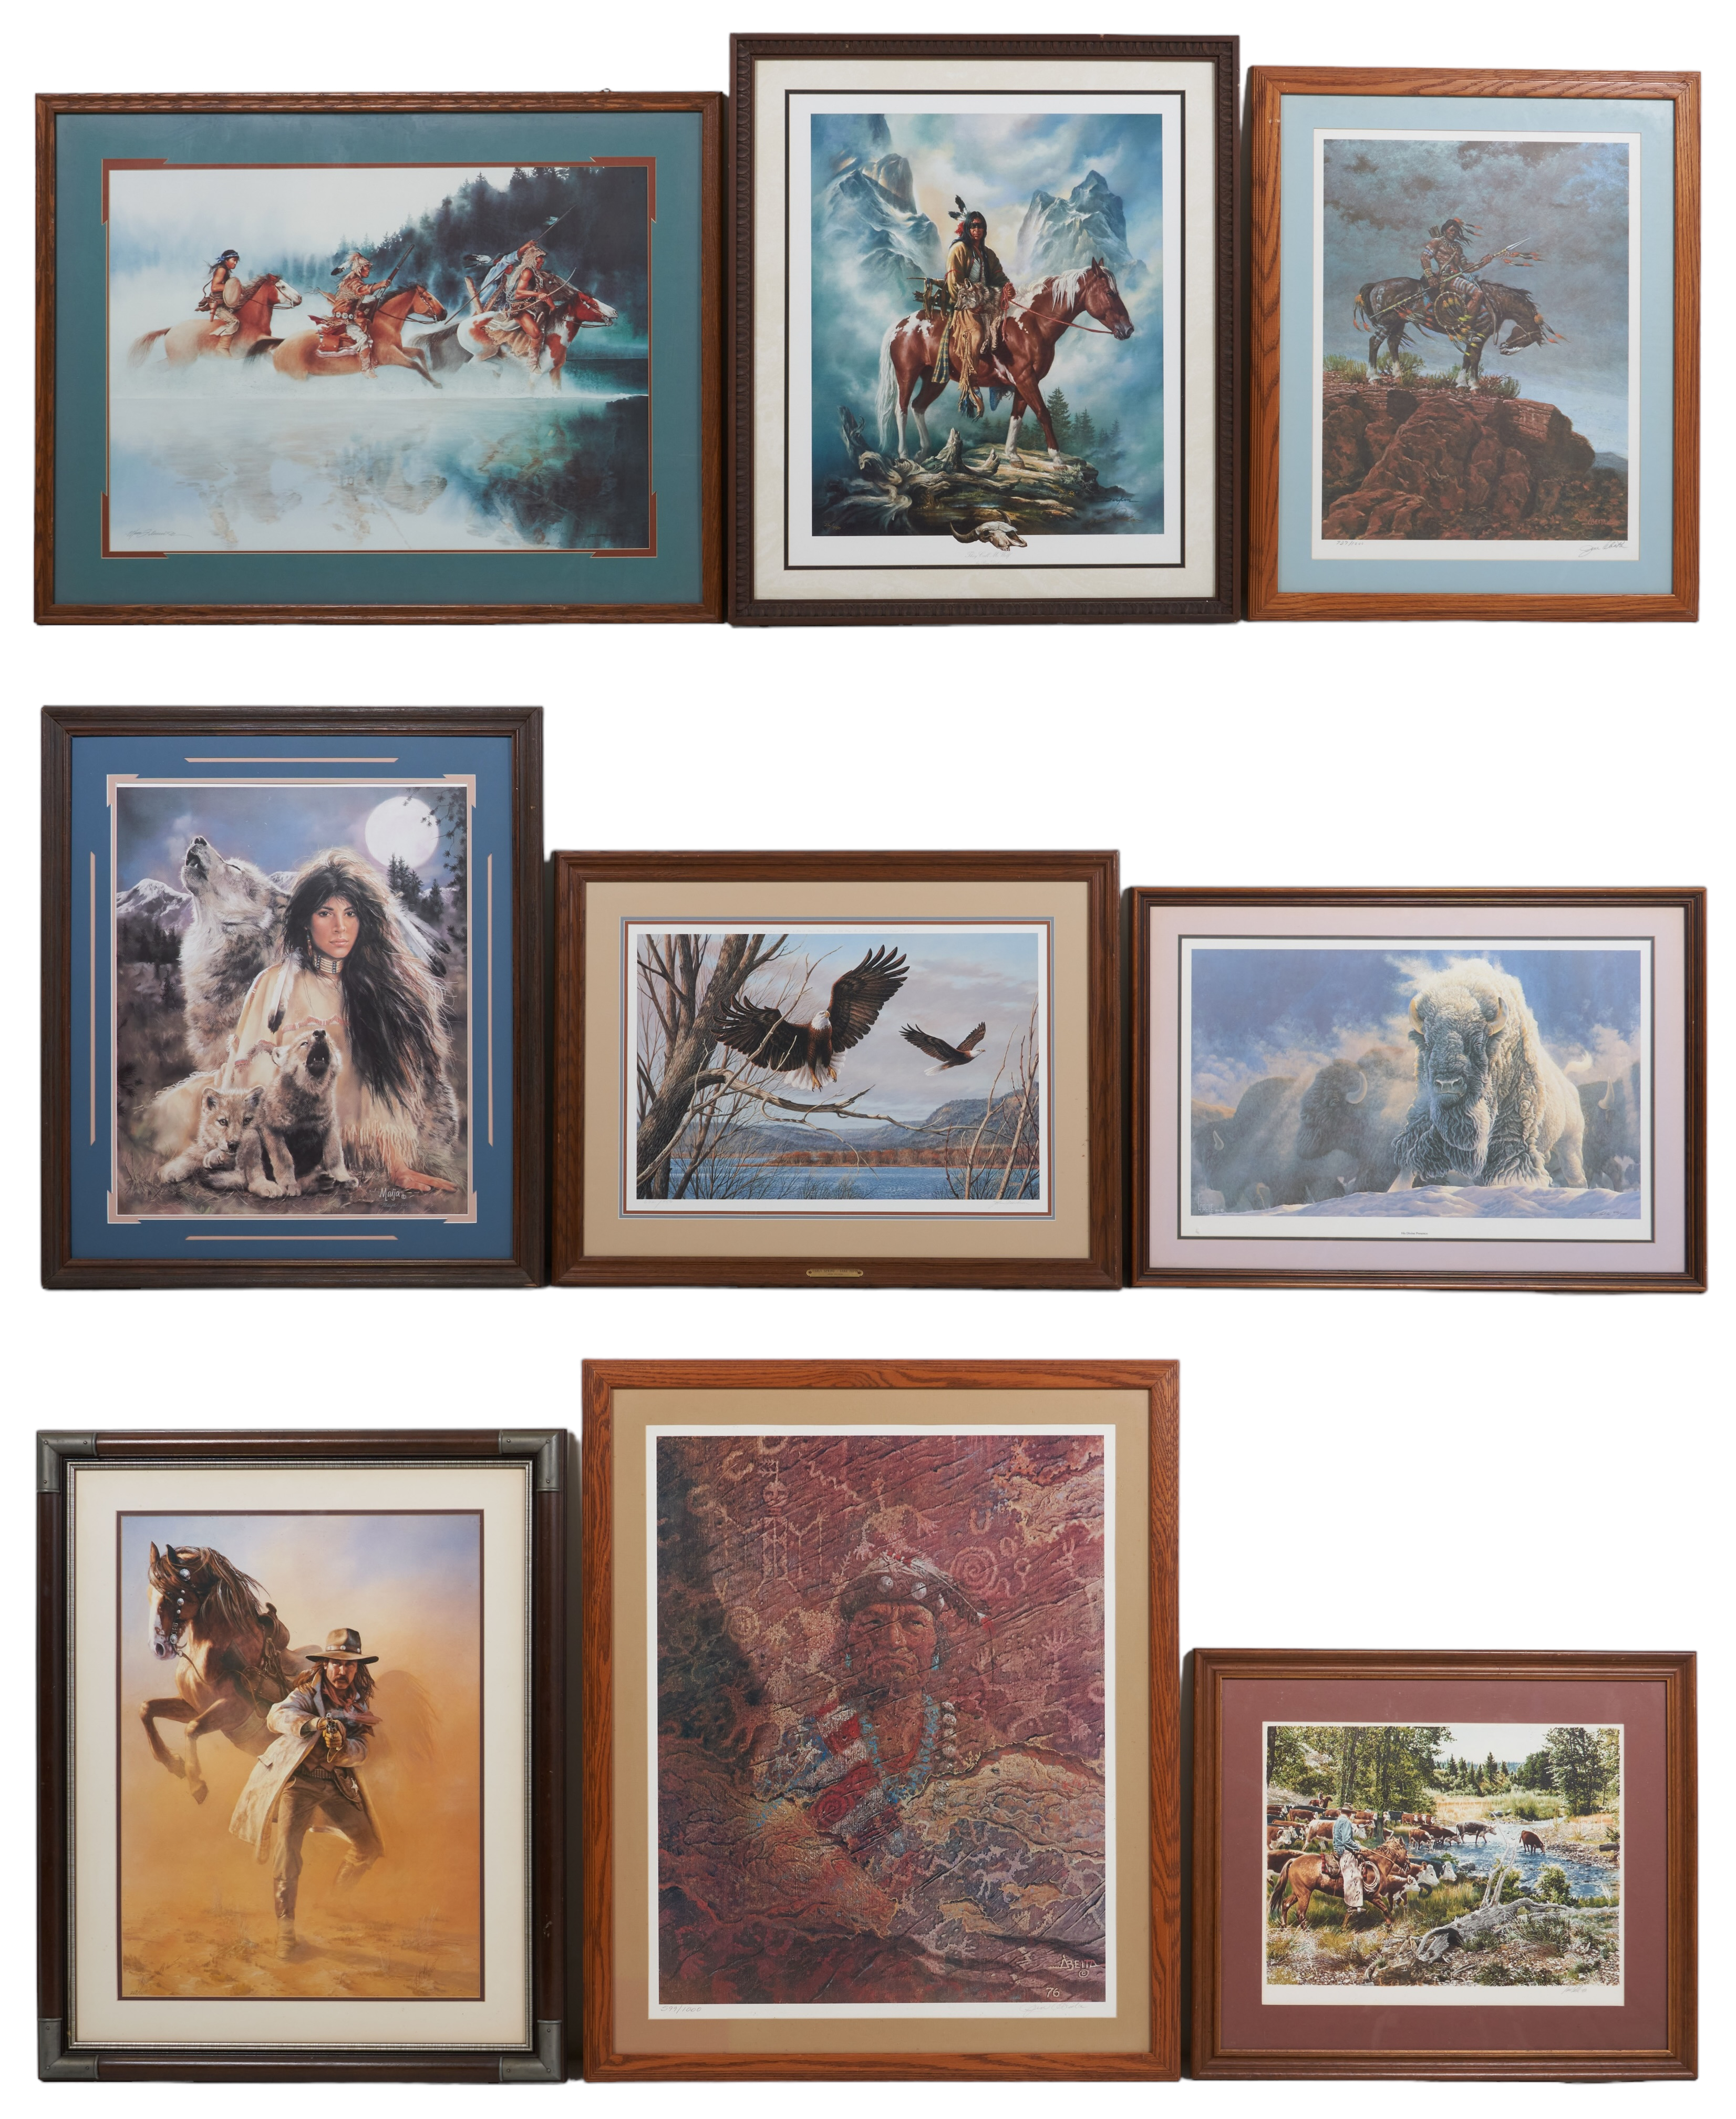  9 Southwestern prints artists 2e20c4